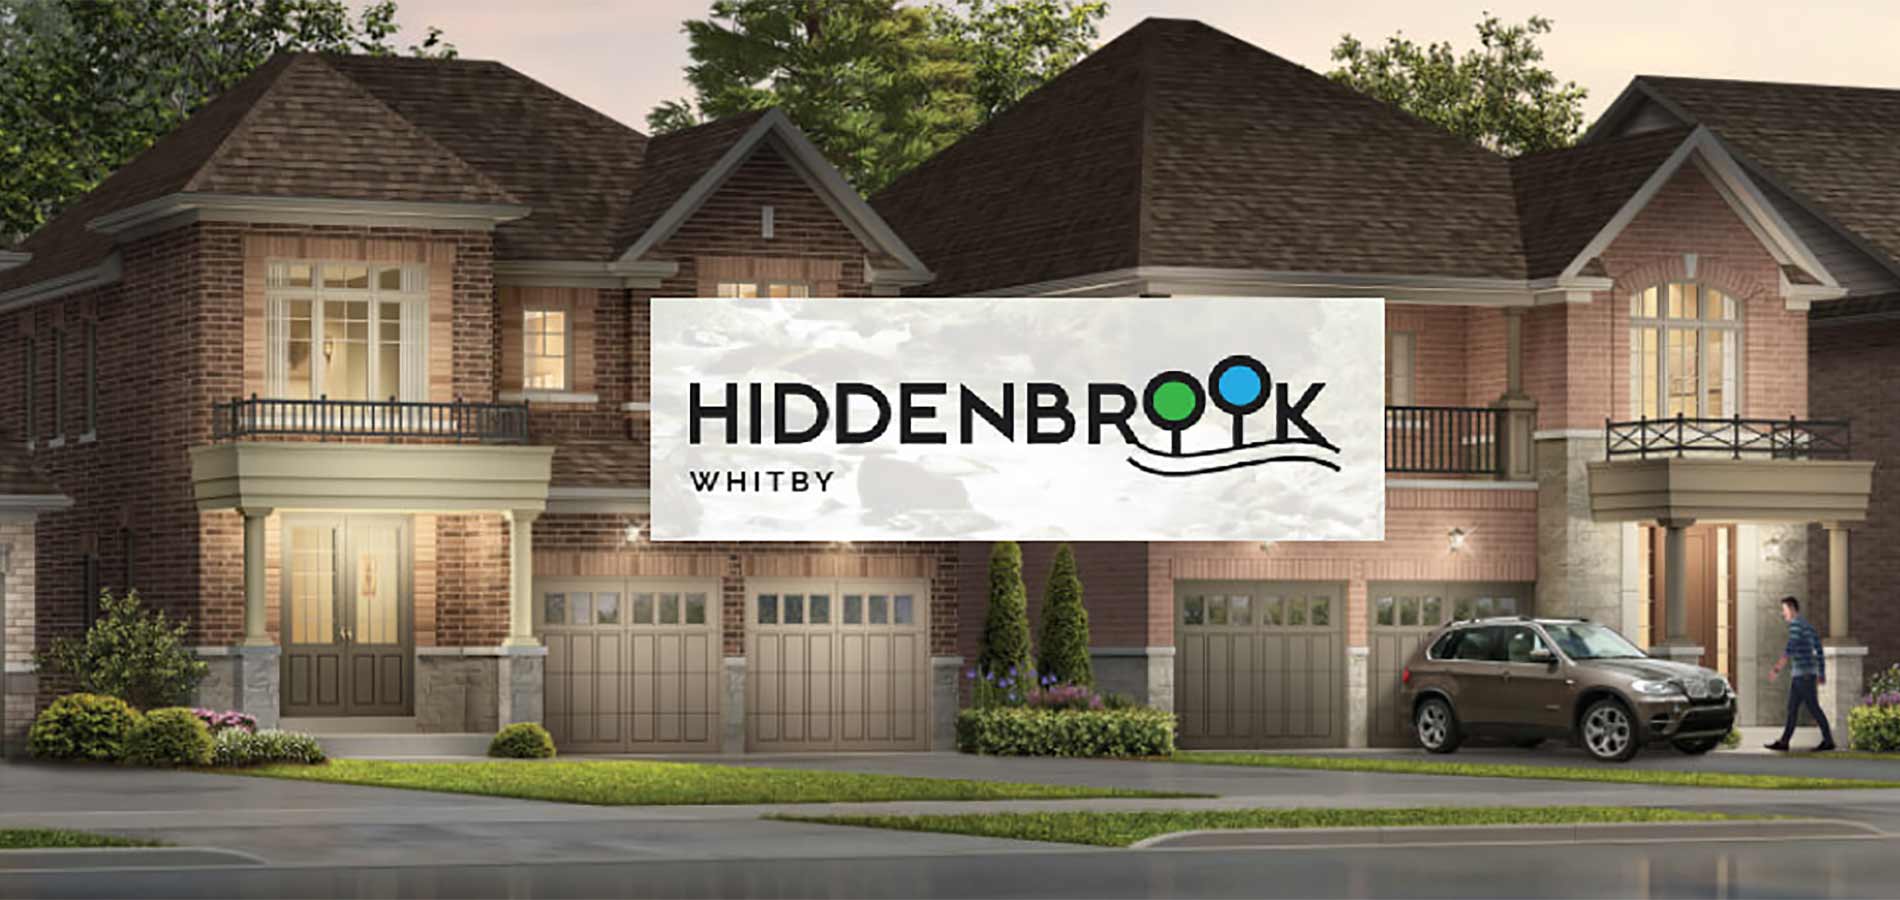 Hiddenbrook Whitby homes